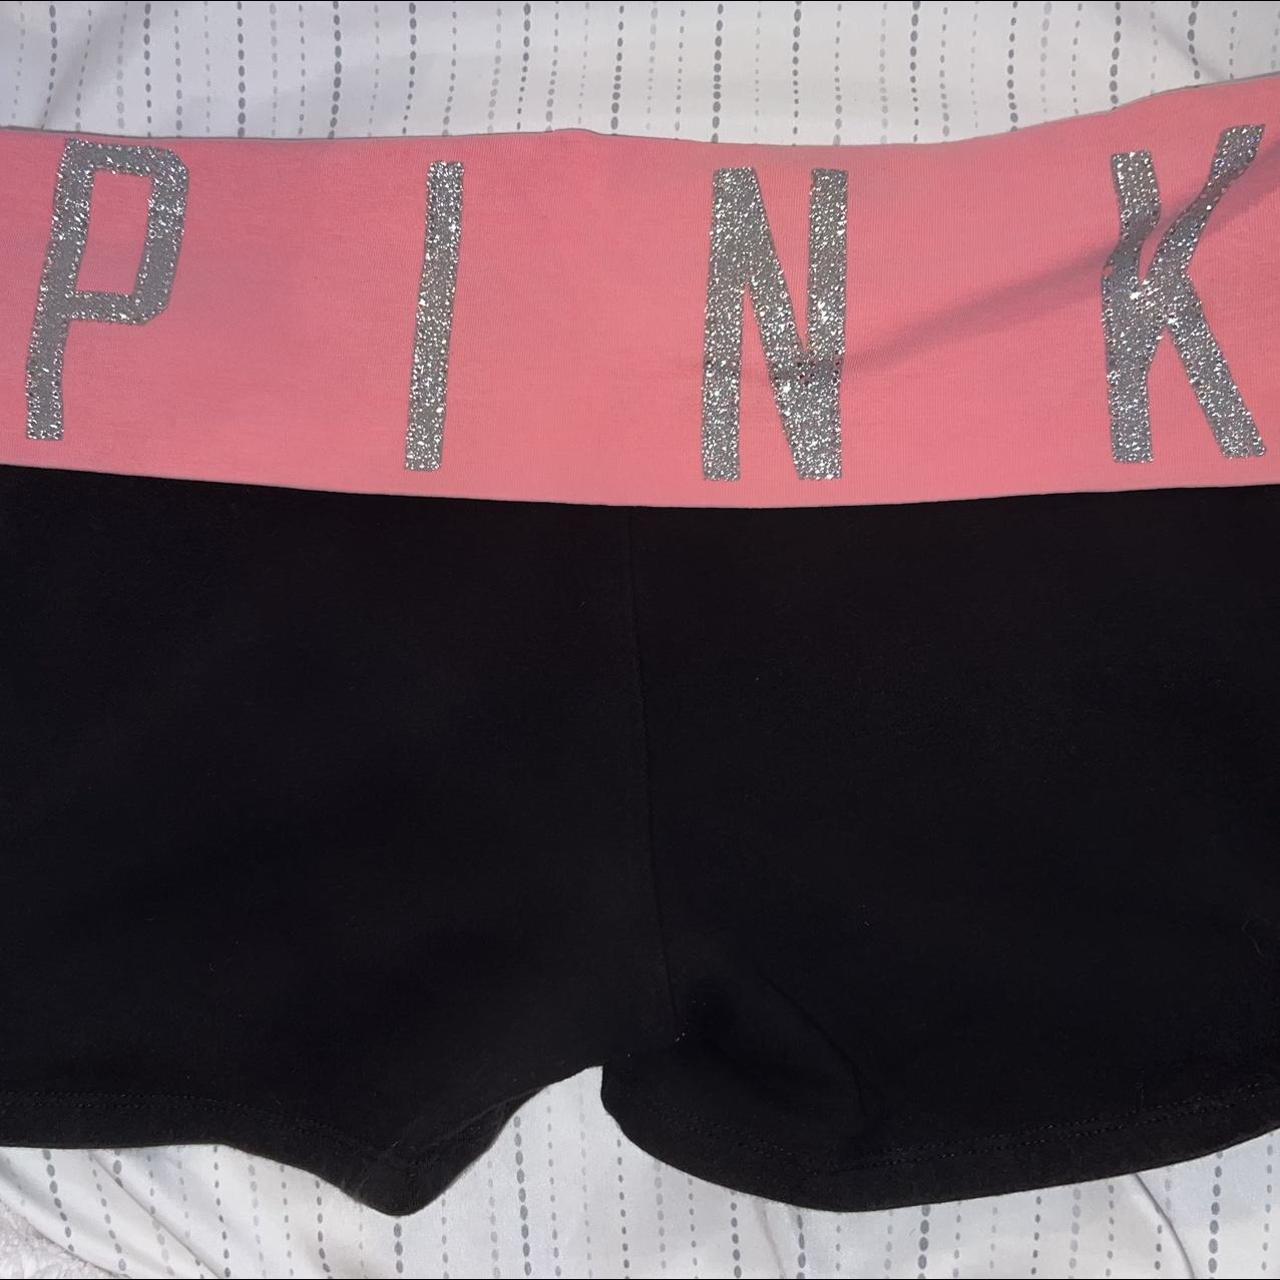 Victoria's Secret Pink foldover yoga shorts